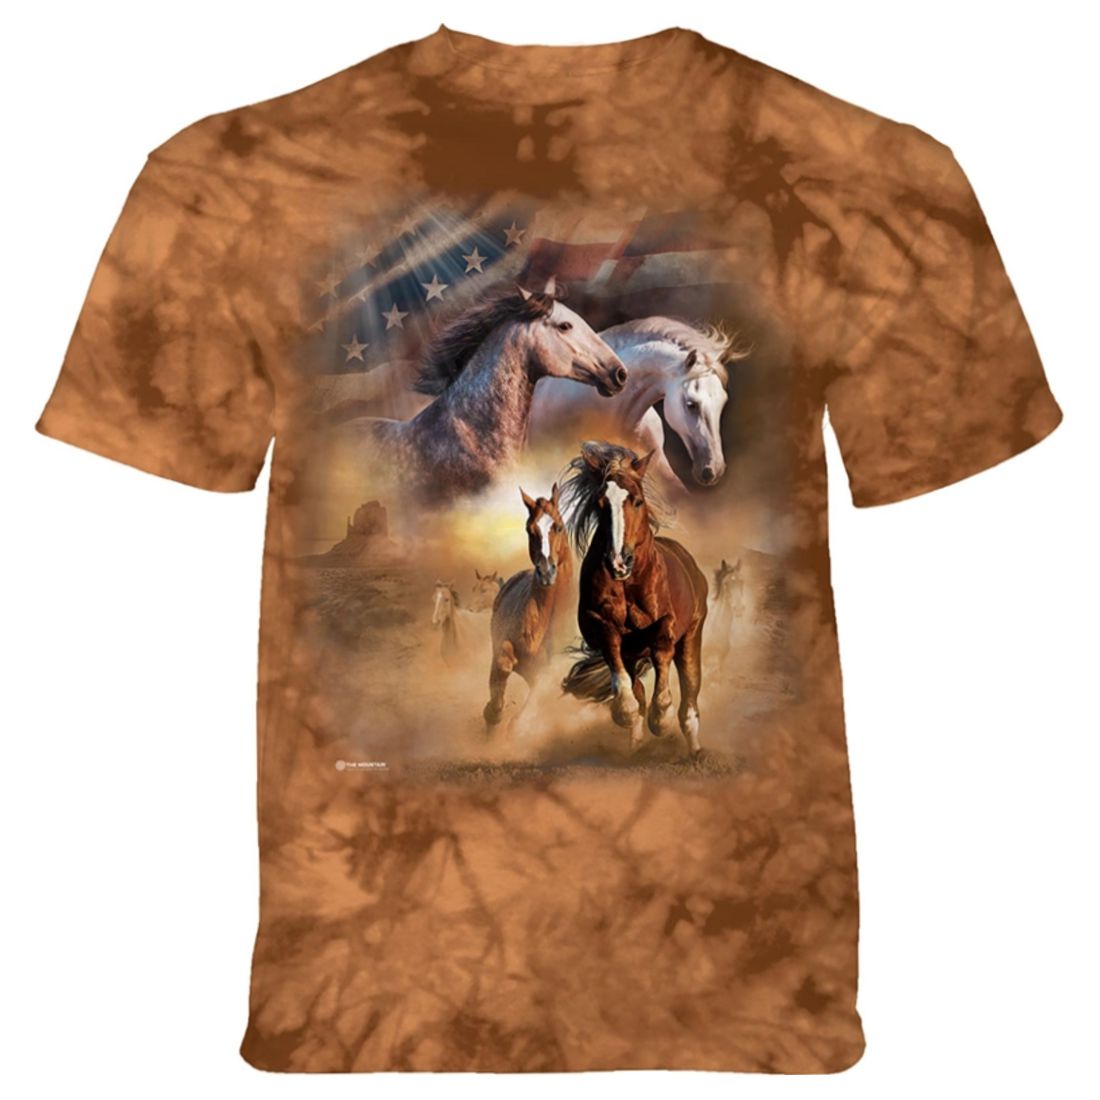 The Mountain T-Shirt - Born Free Horses